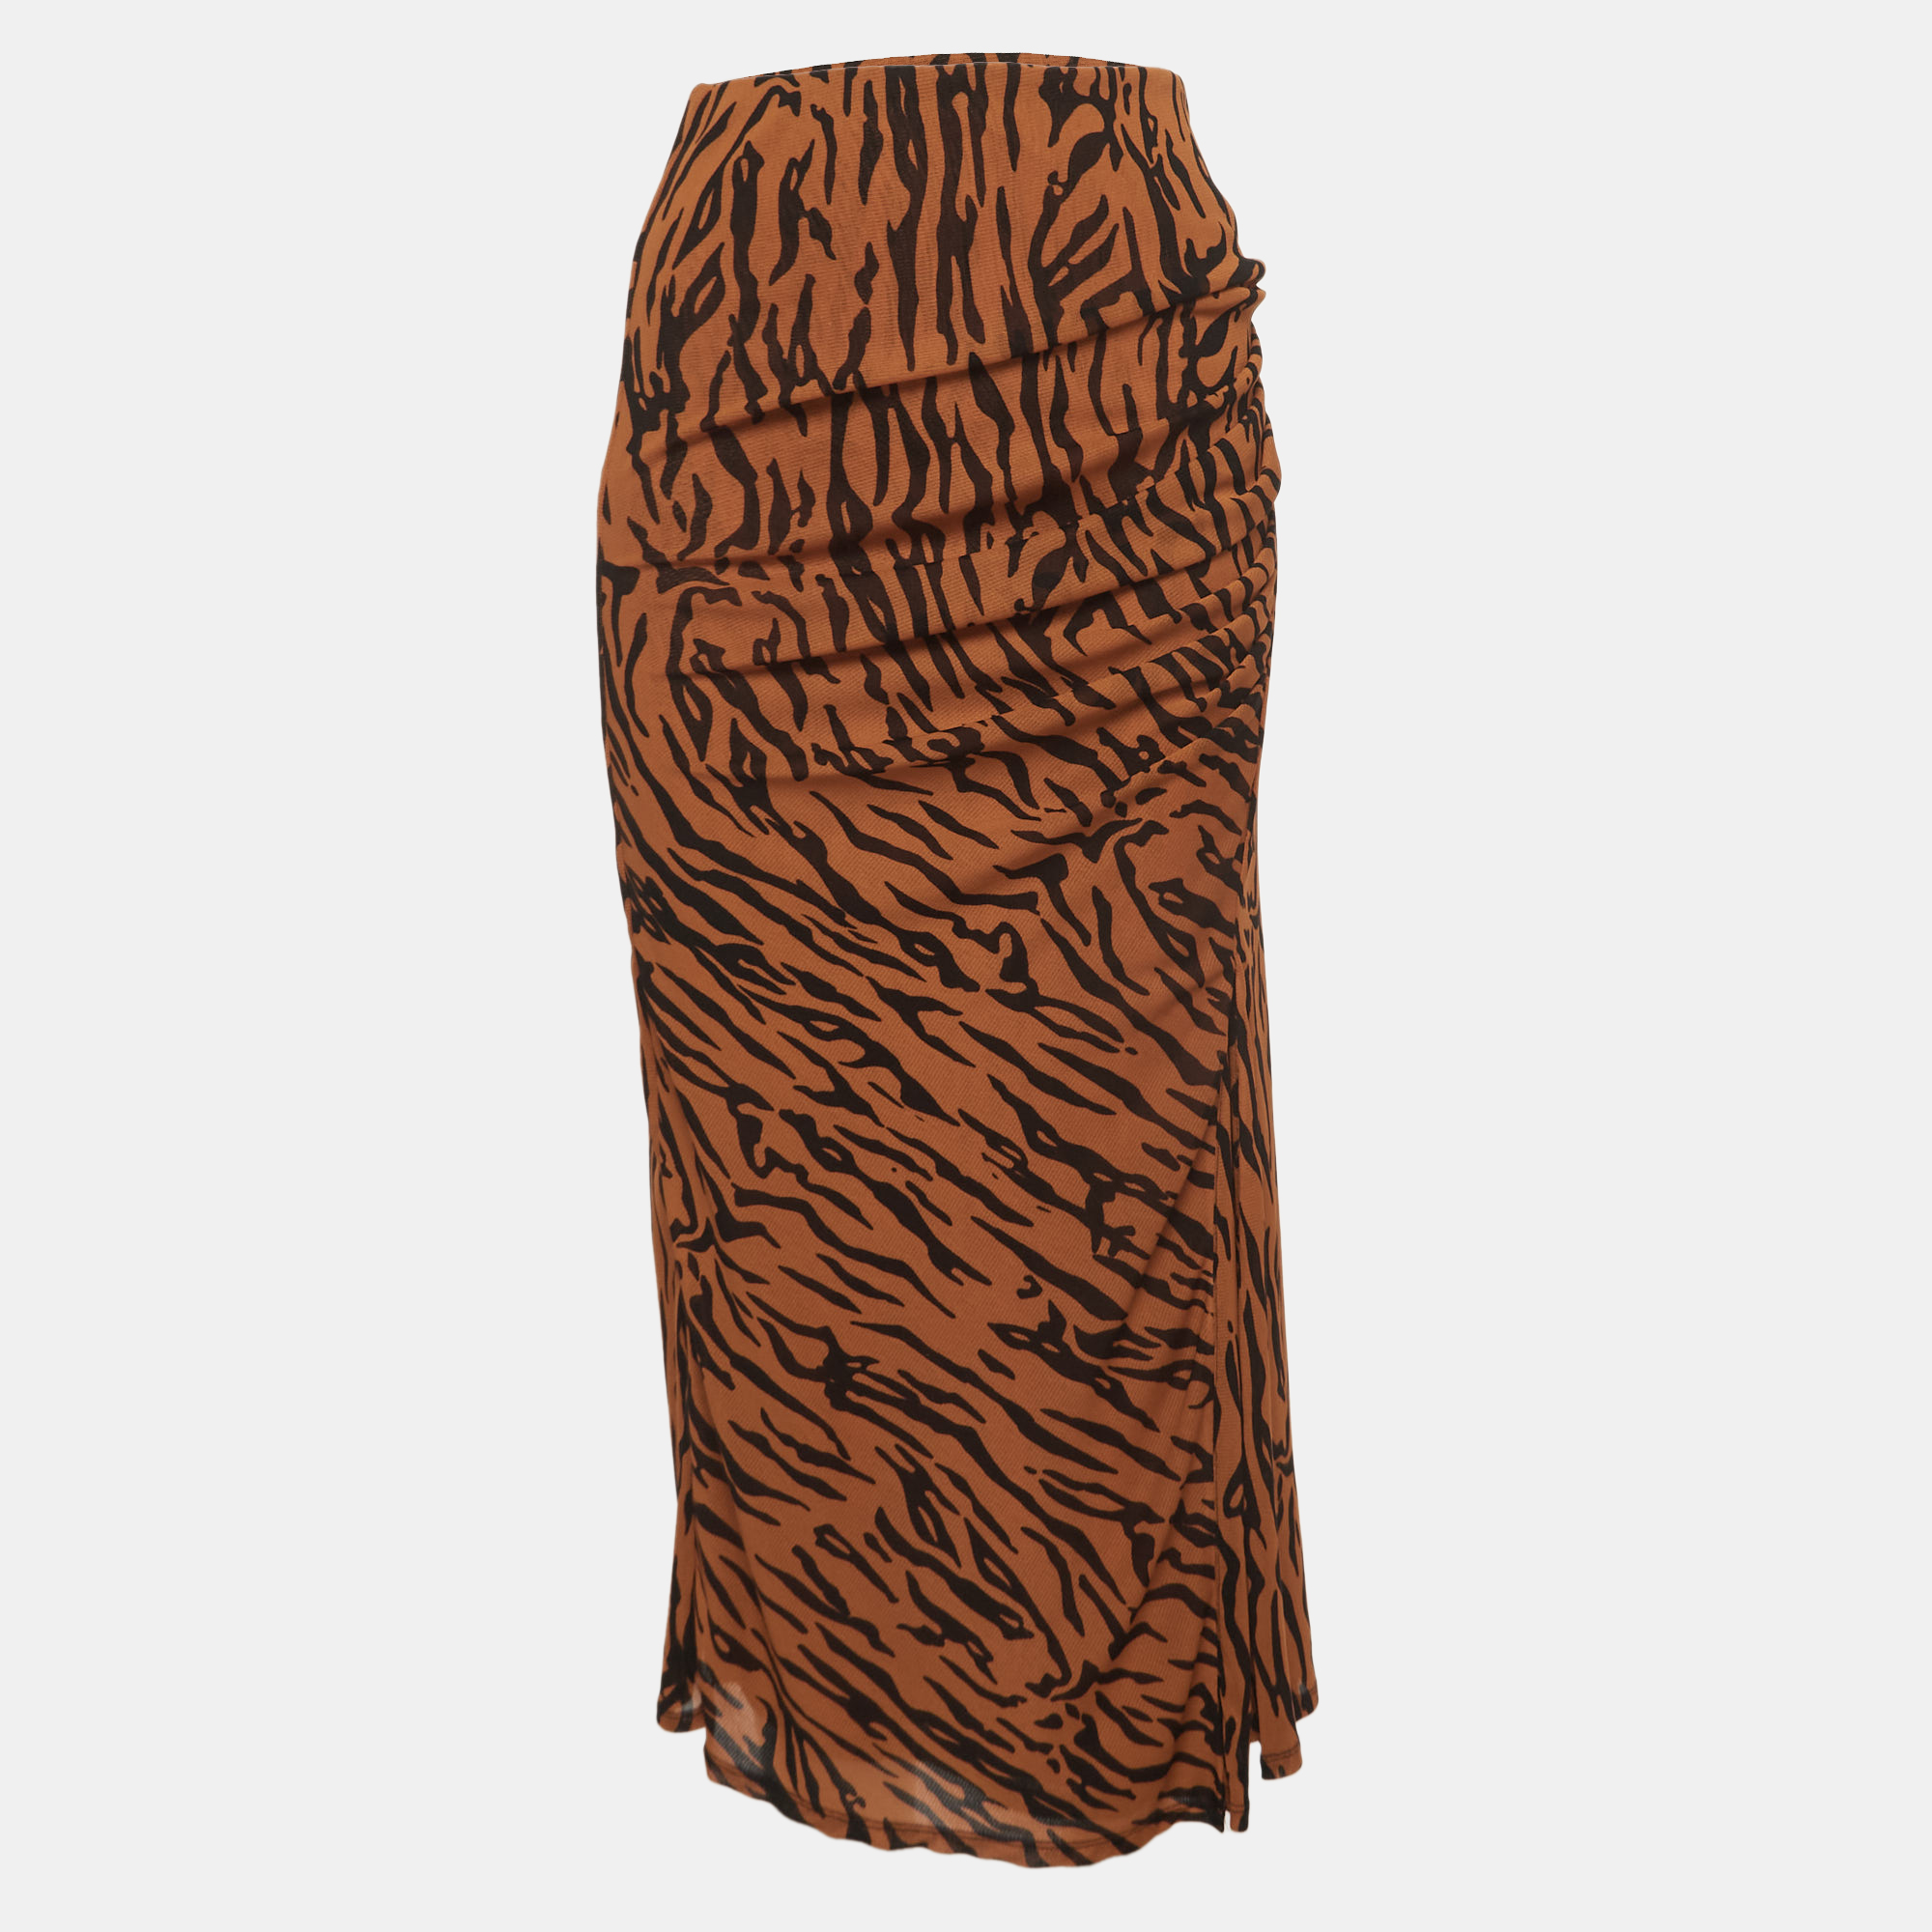 Diane von furstenberg orange print stretch knit caspian tigress midi skirt s